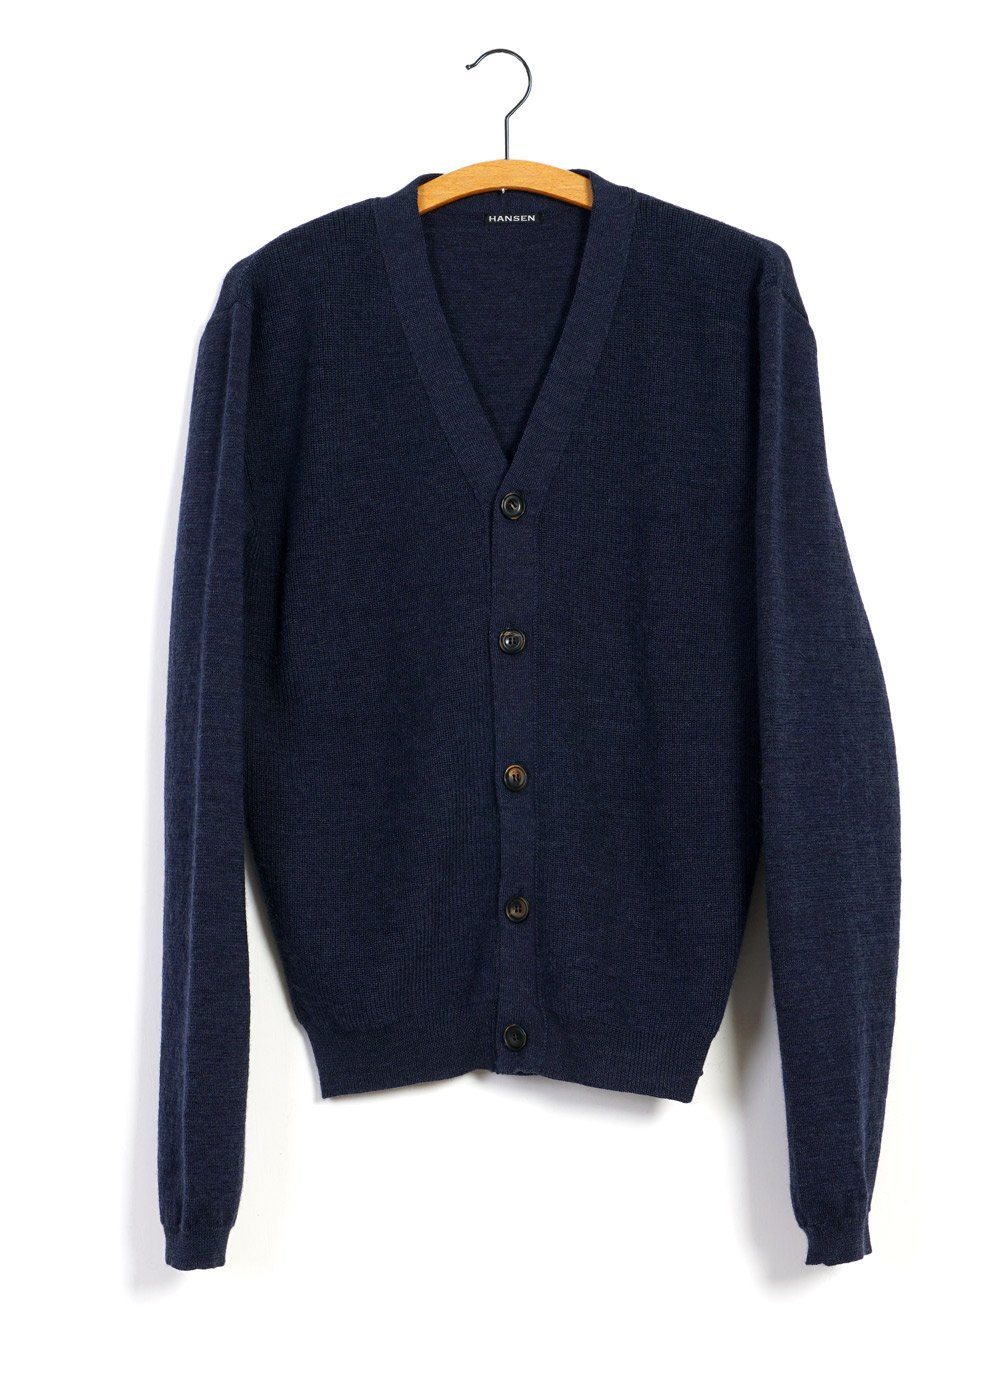 HANSEN Garments - LEON | Knitted Cardigan | Bluemele - HANSEN Garments